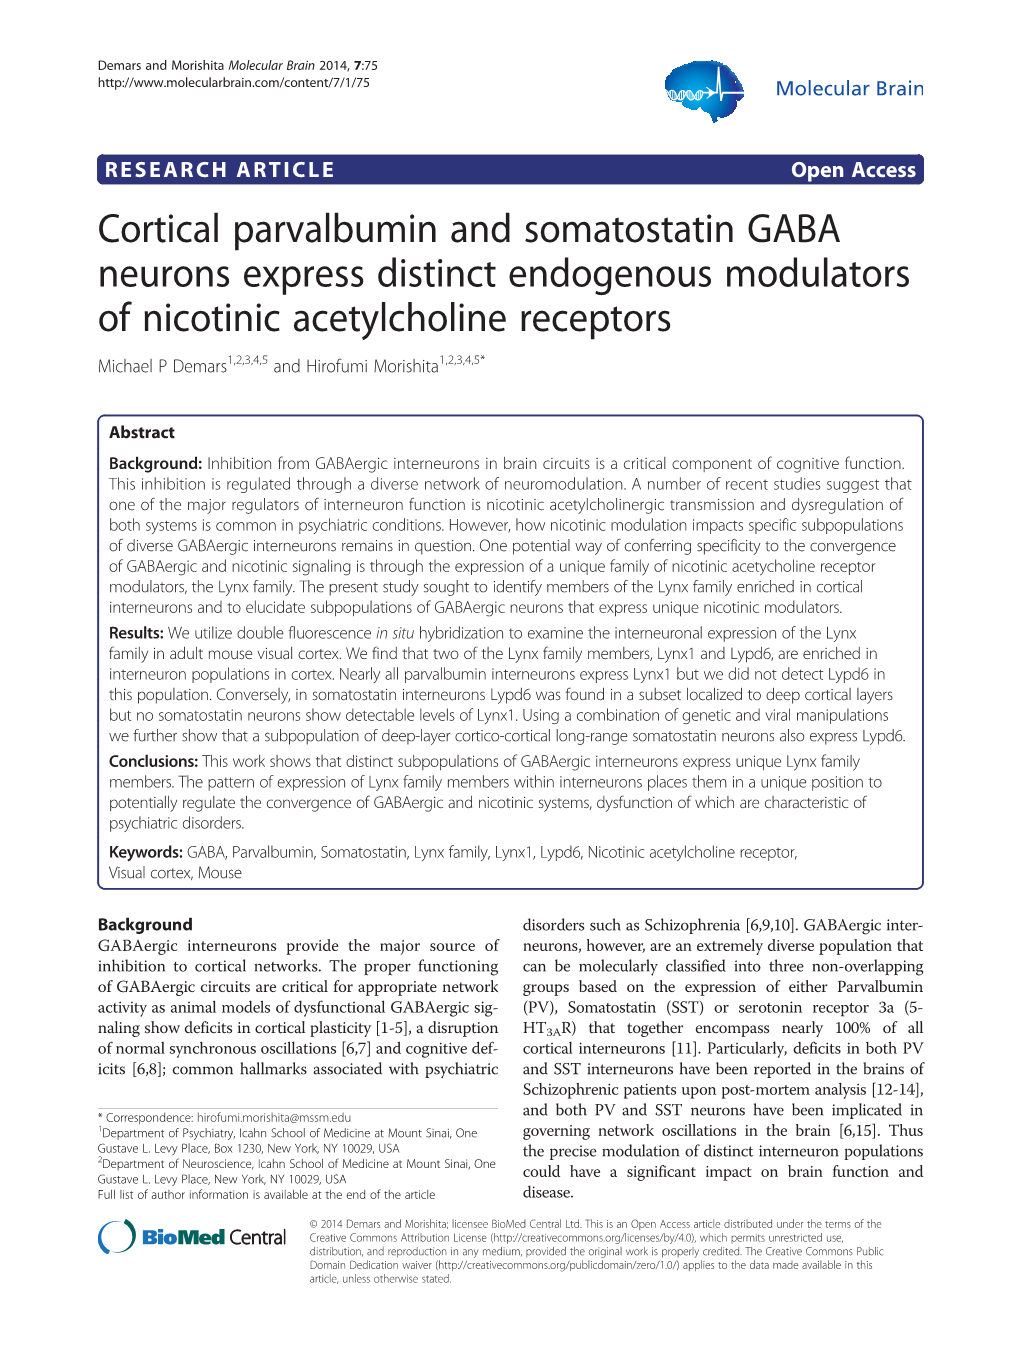 Cortical Parvalbumin and Somatostatin GABA Neurons Express Distinct